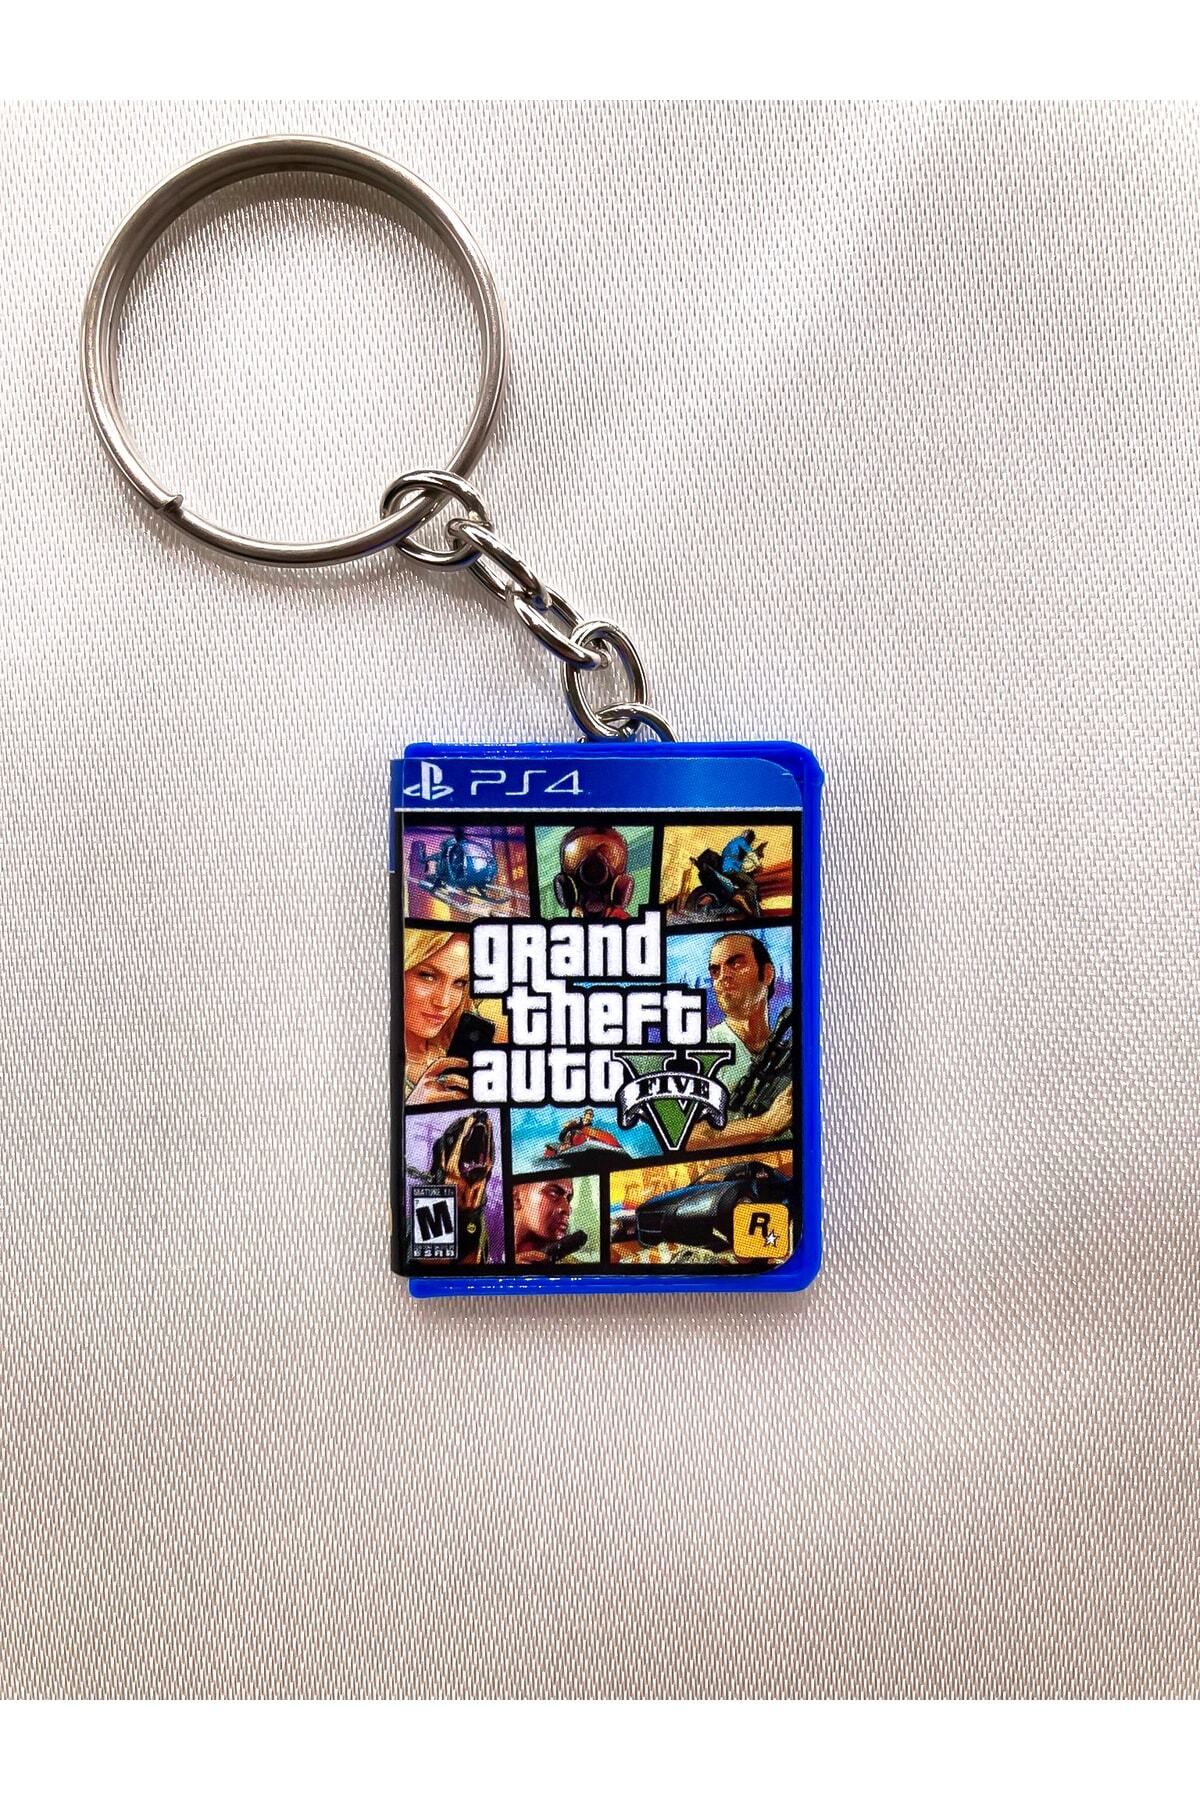 Cosmic Star Gta 5 Grand Theft Auto V Minyatür Ps4 Oyun Kutusu Anahtarlık